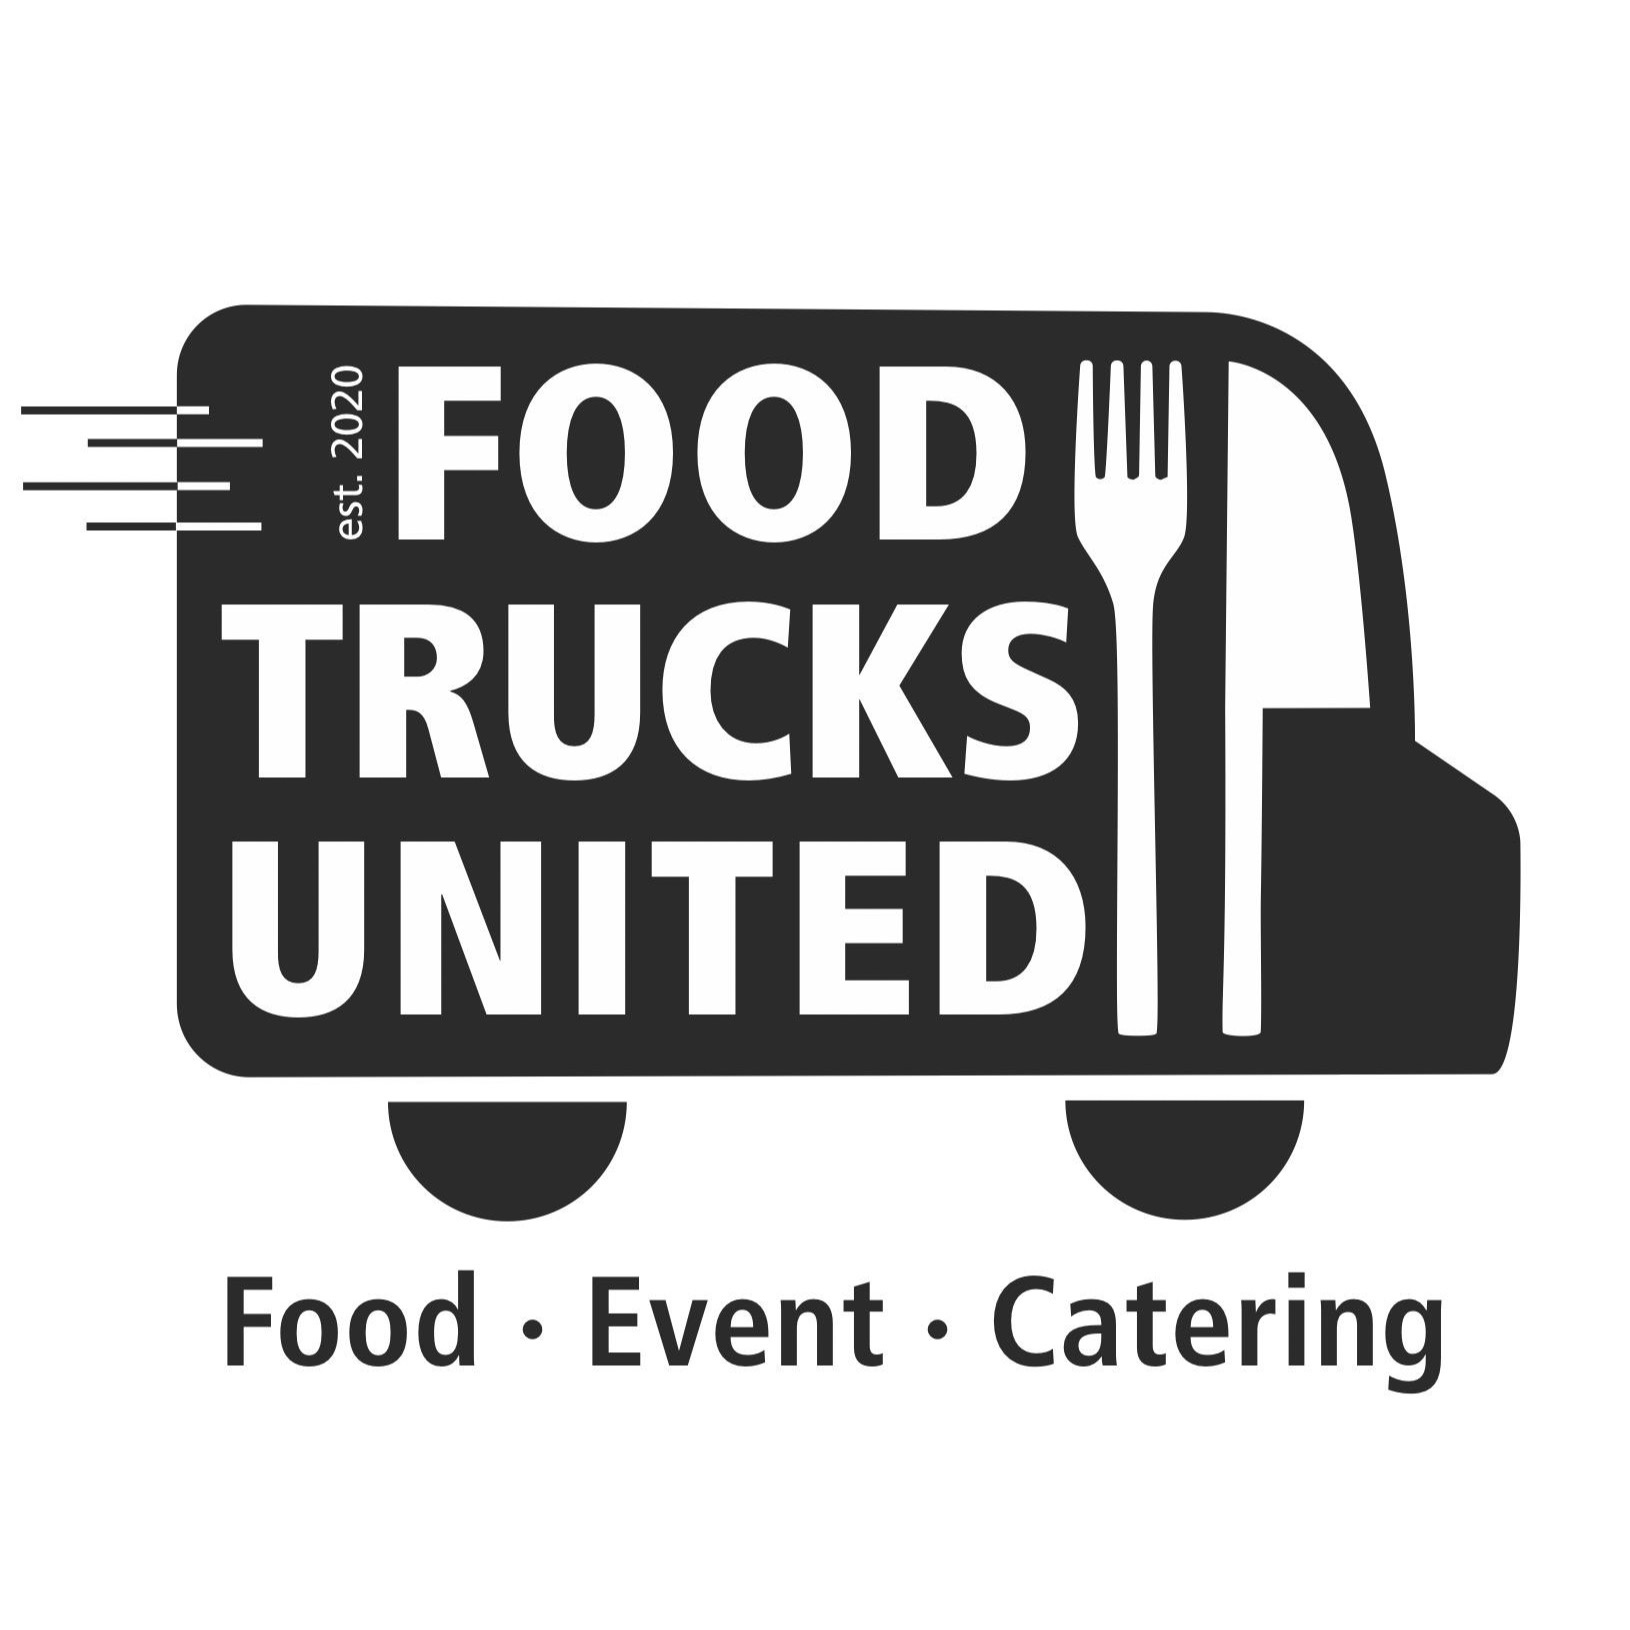 FOOD TRUCKS UNITED Logo